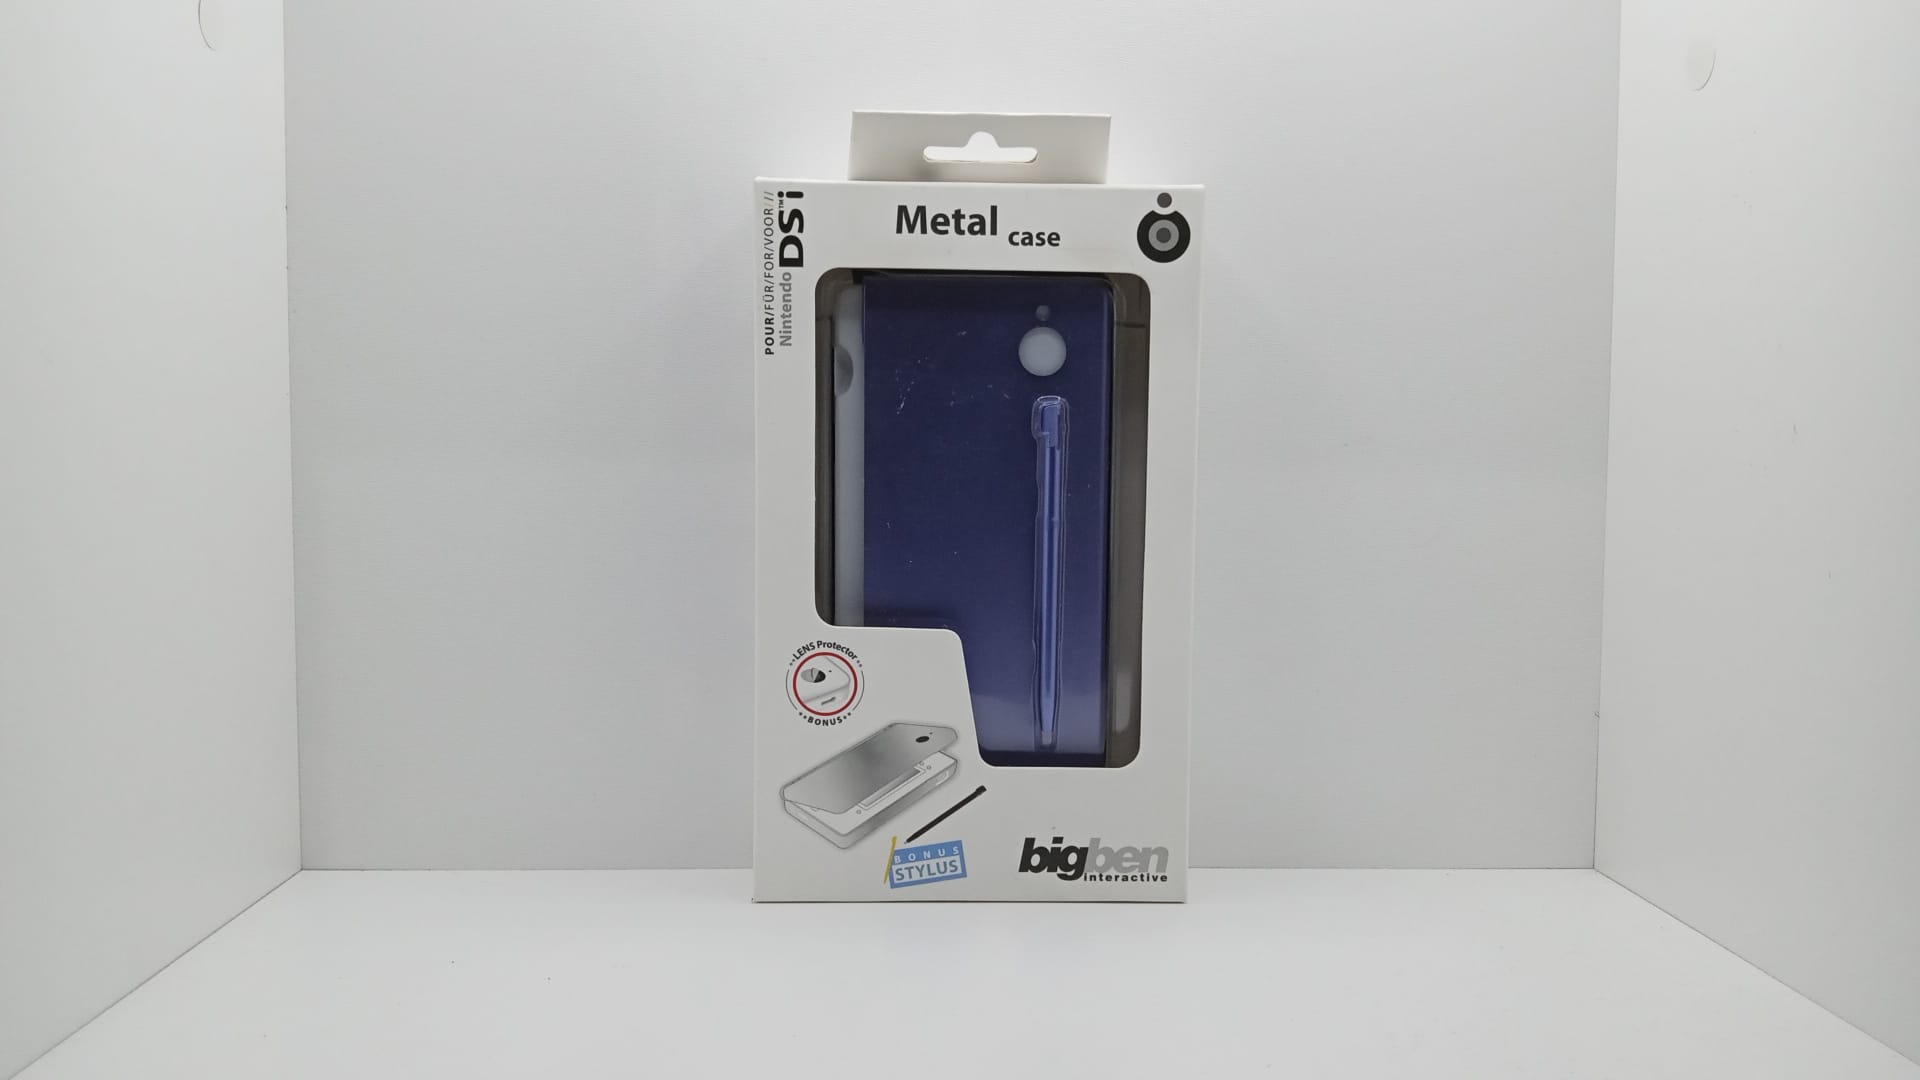 Carcasa metalica + Stylus - BigBen -Nintendo DSi - 005